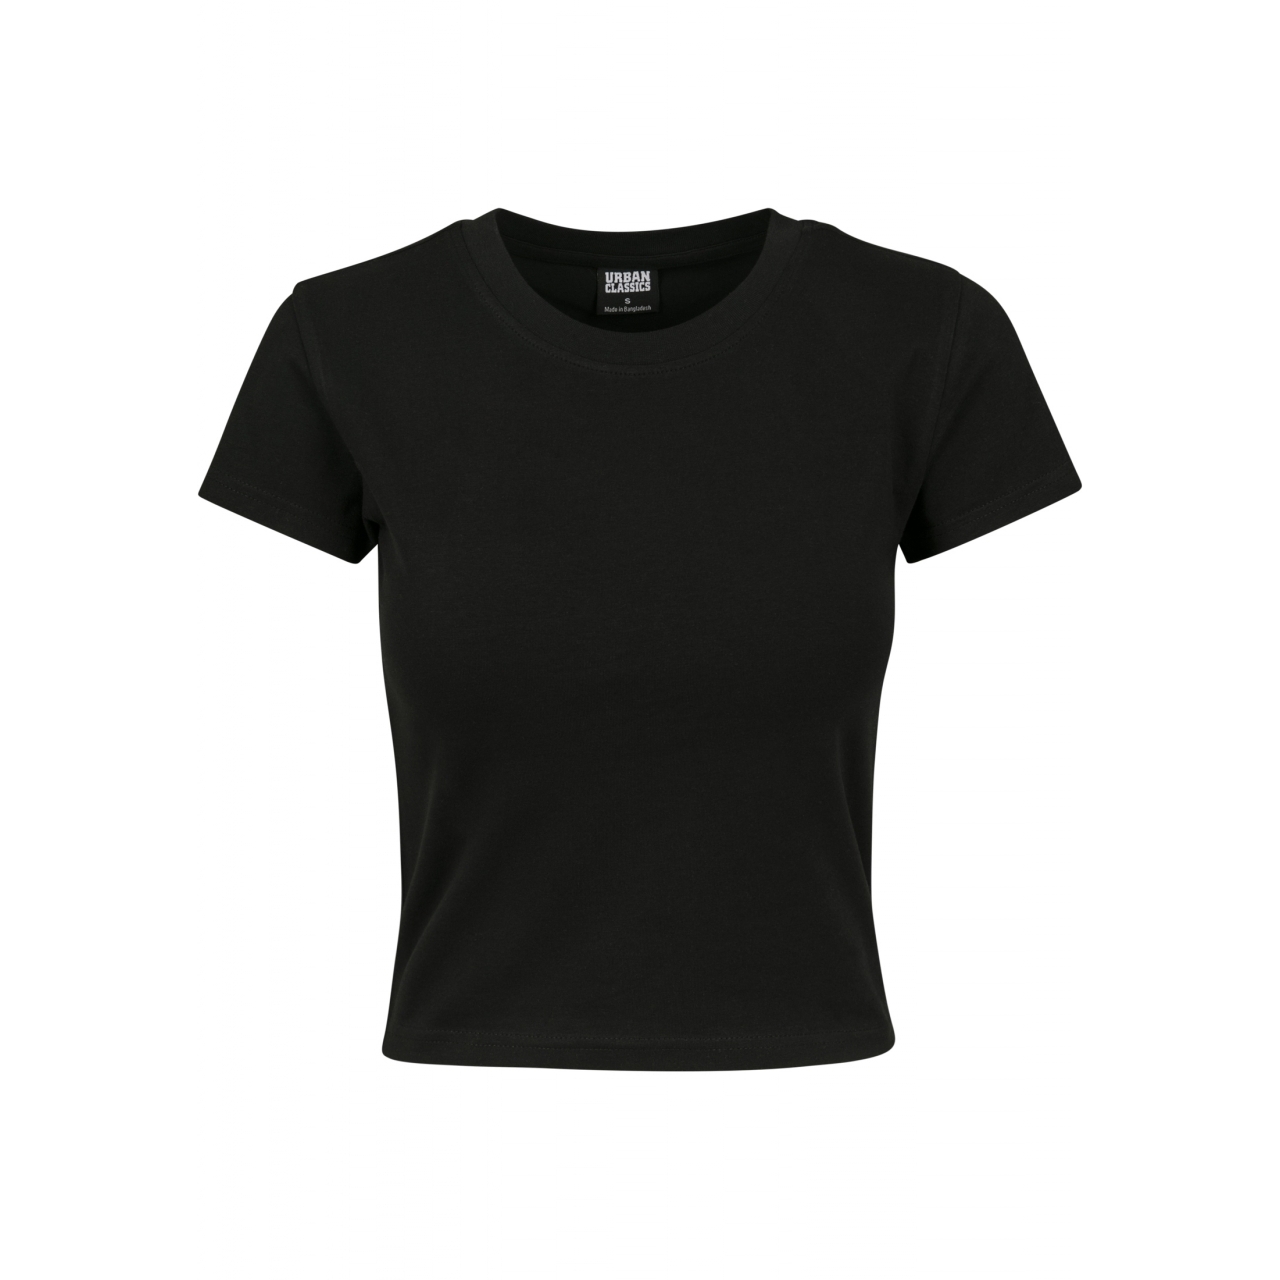 Triko dámské Urban Classics Ladies Stretch Jersey - černé, 5XL